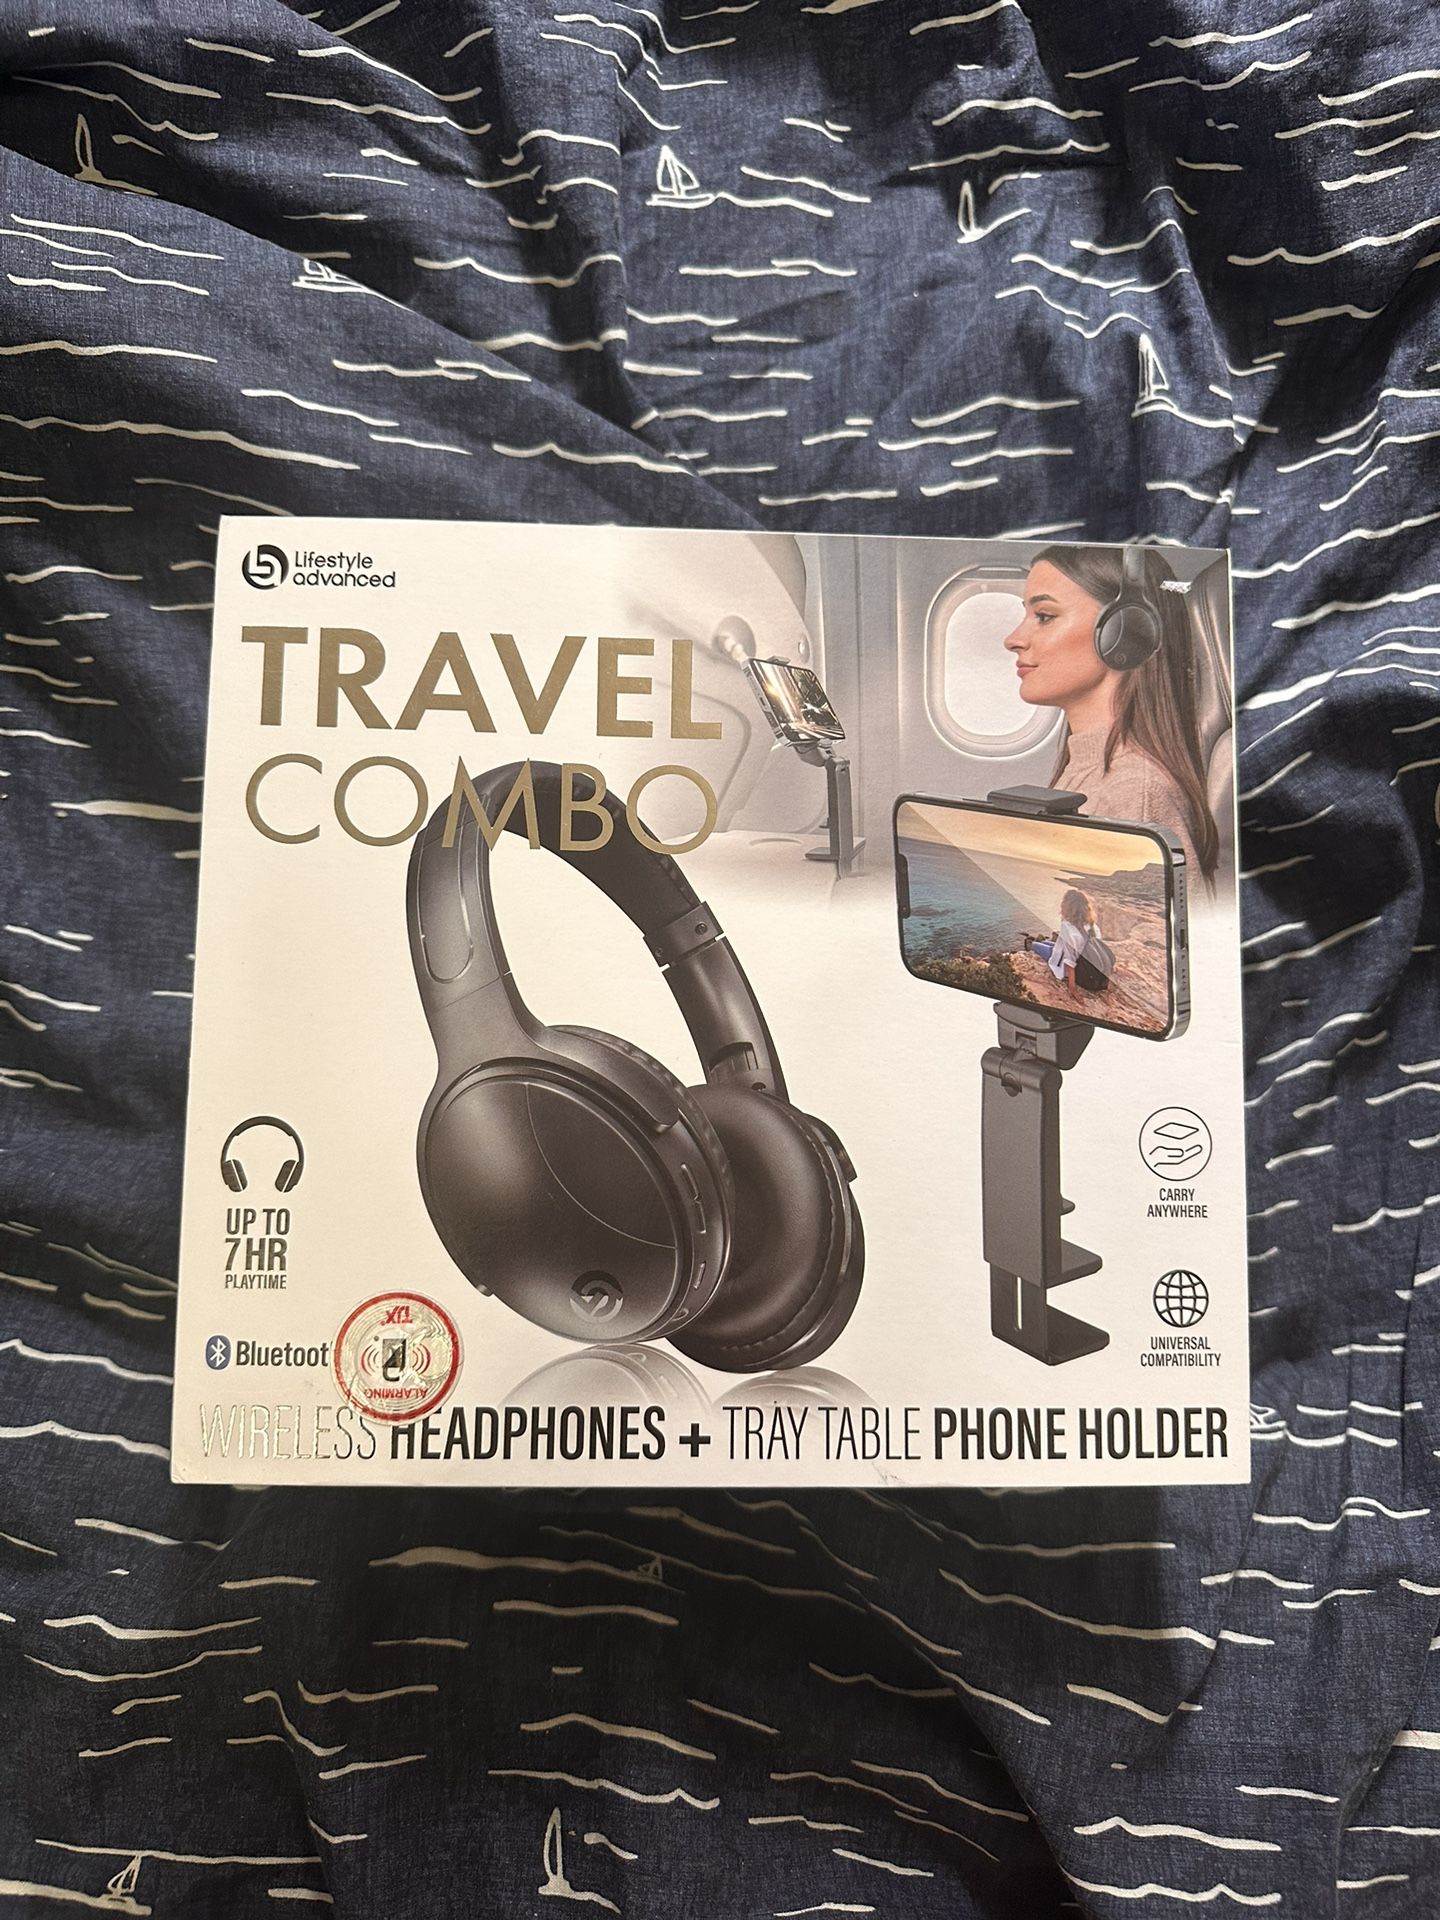 Travel Combo Wireless Headphones + Tray Table Phone Holder